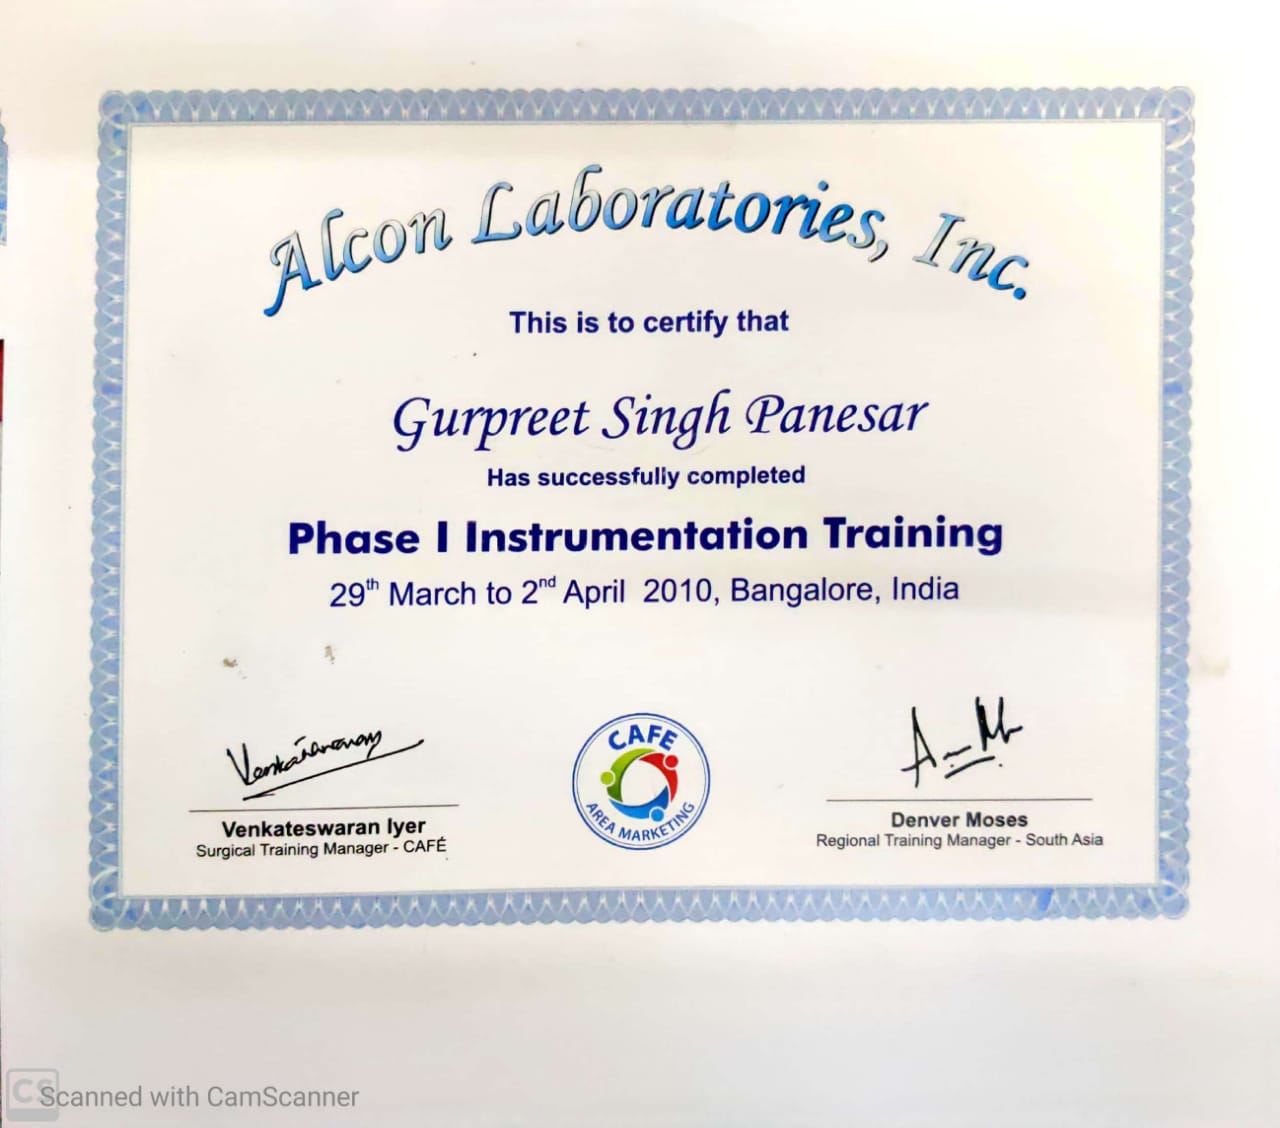 Alcon Machine instrumentation training certificate